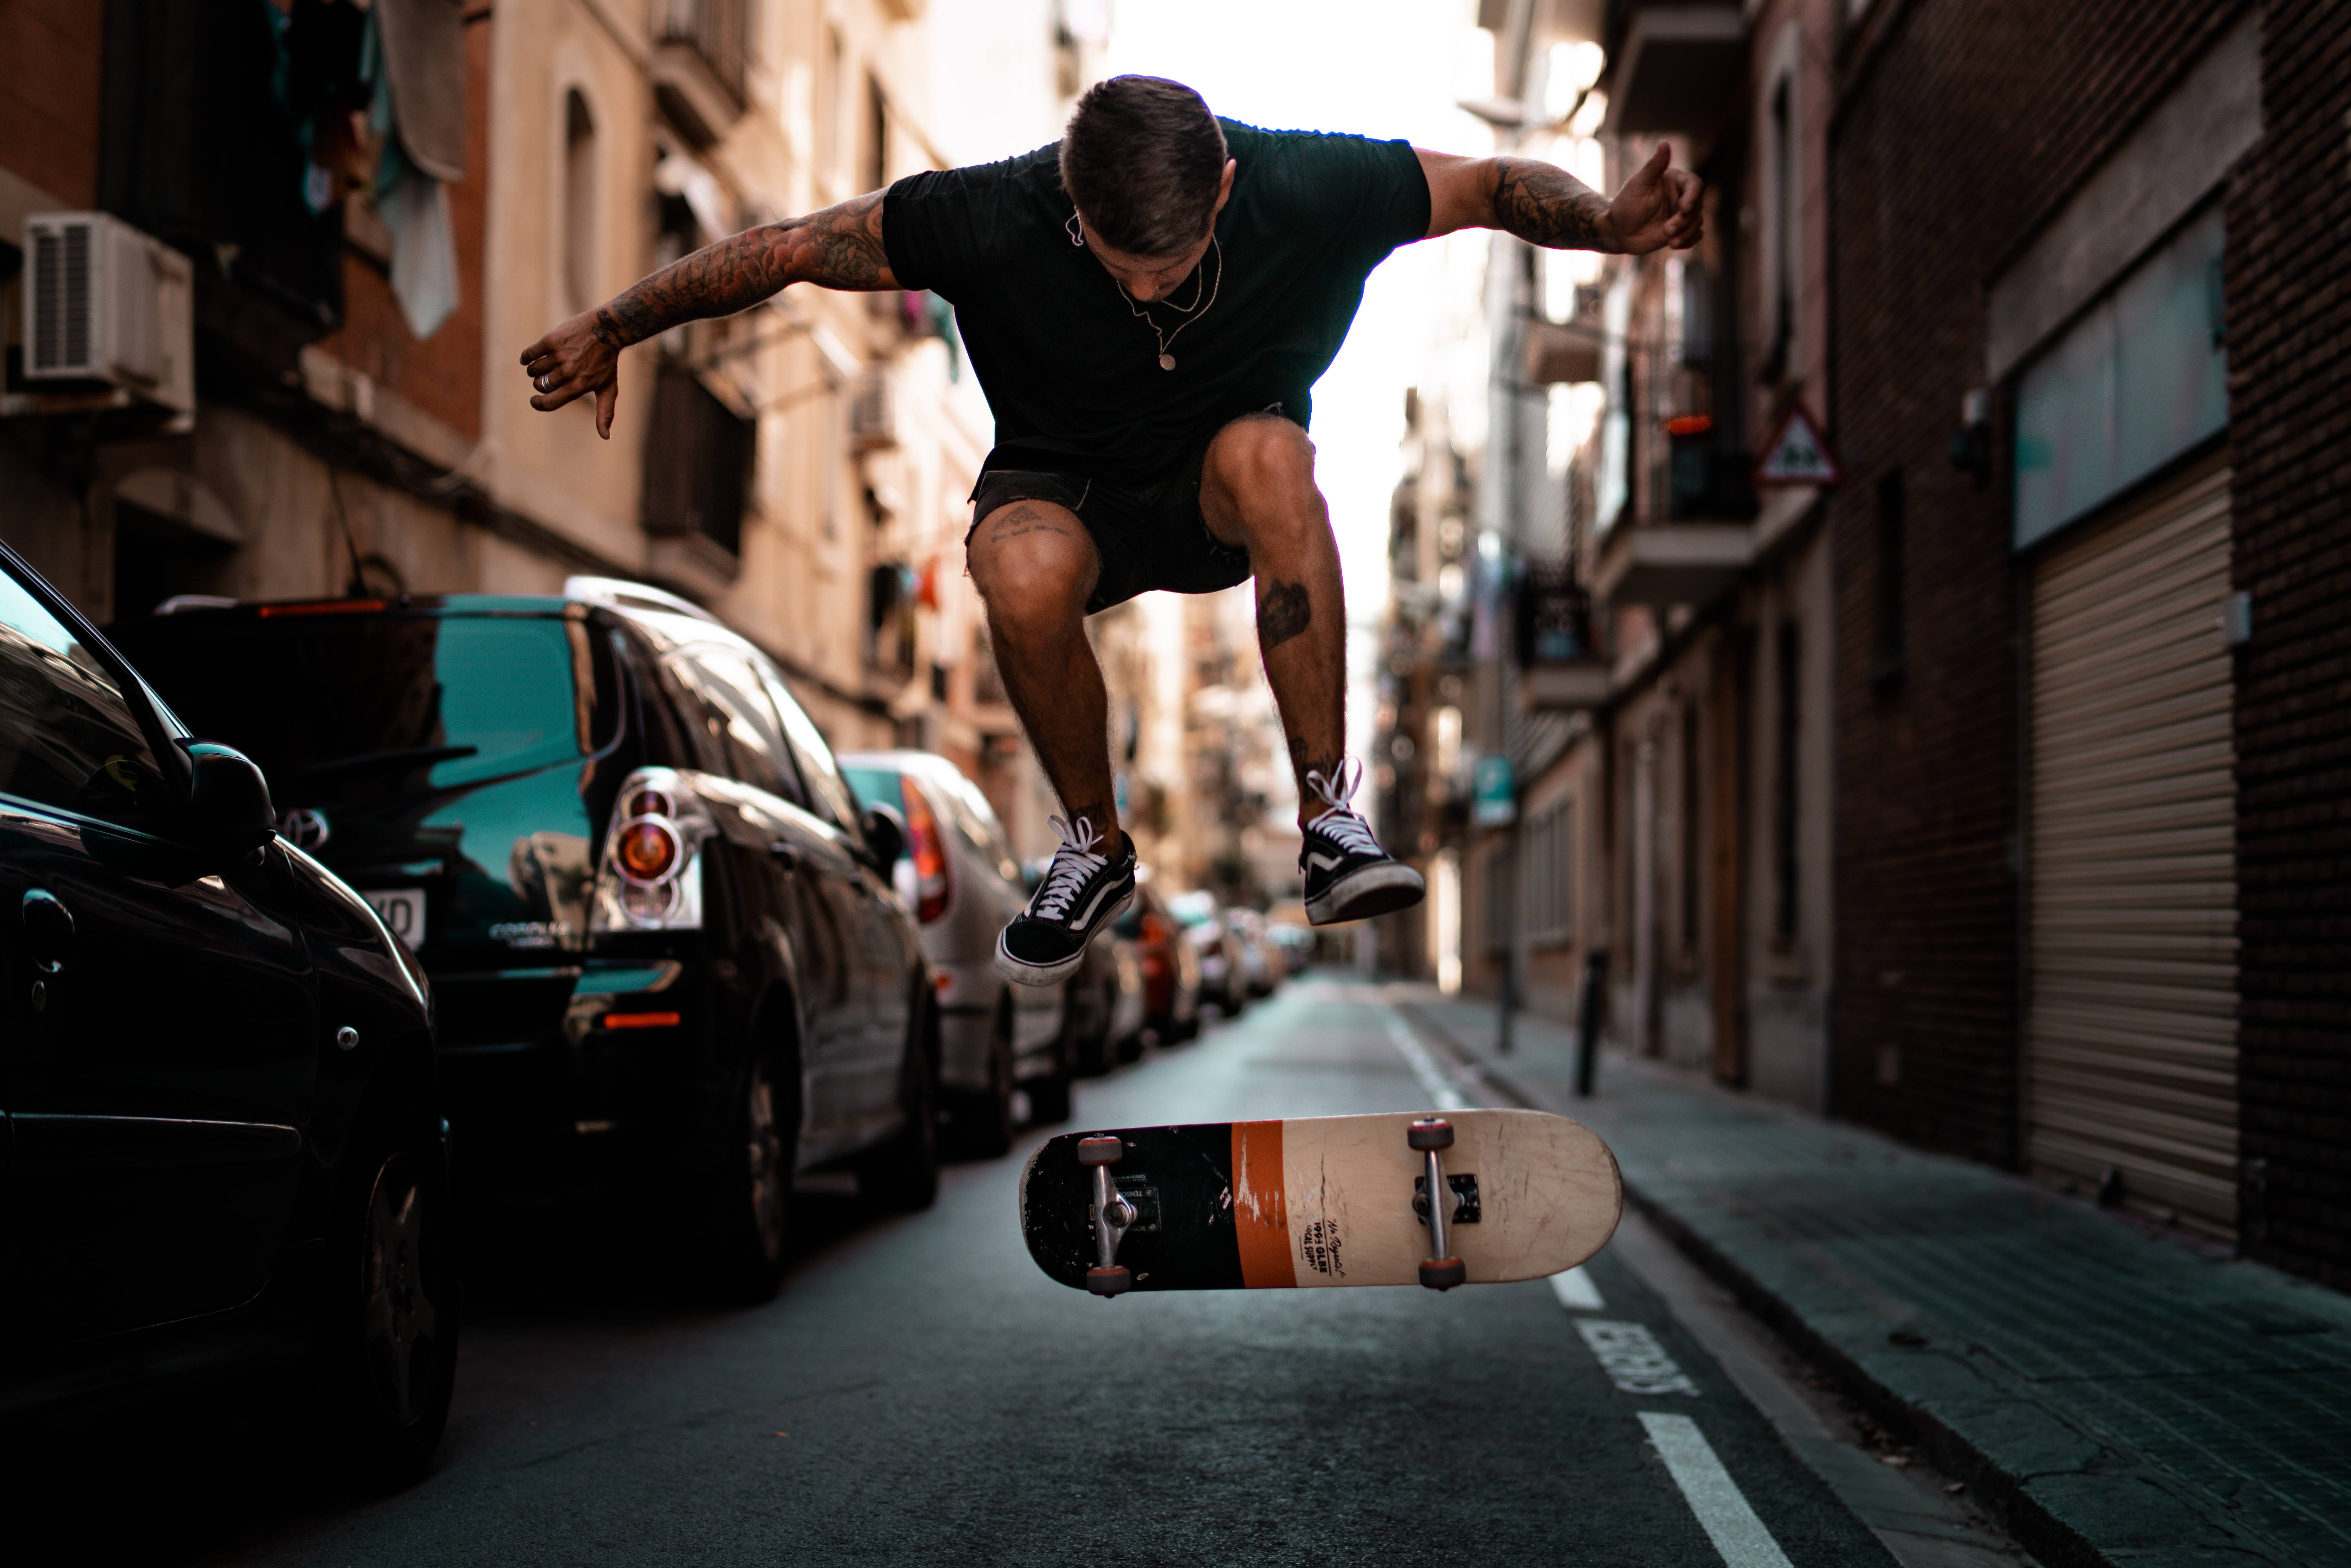 A young man doing a kick flip on a skateboard